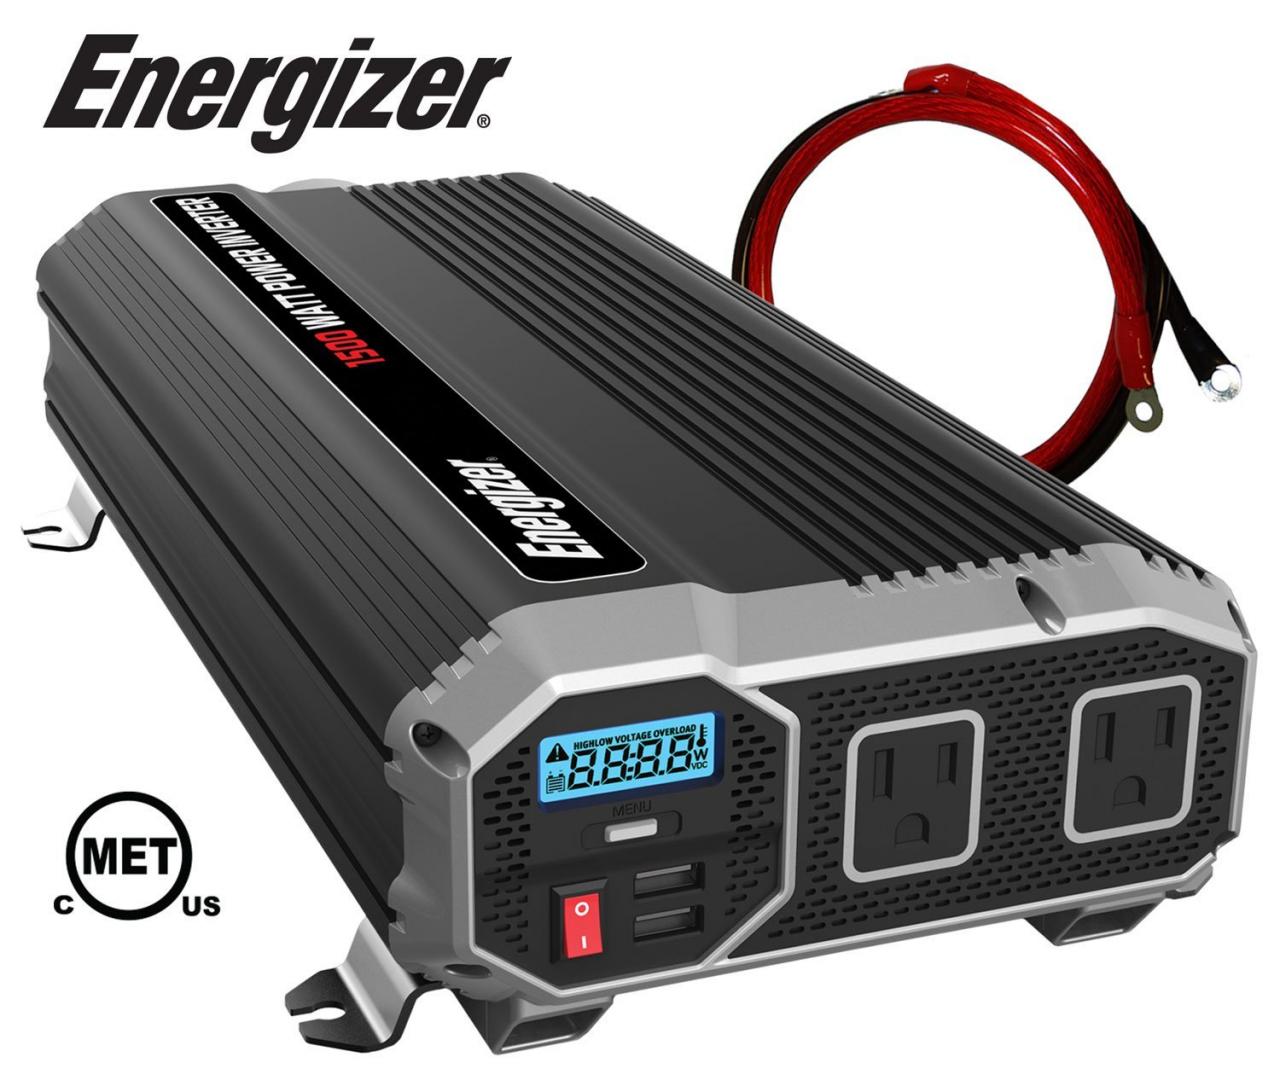 ENK1500 - 1500 Watt Power Inverter | Energizer